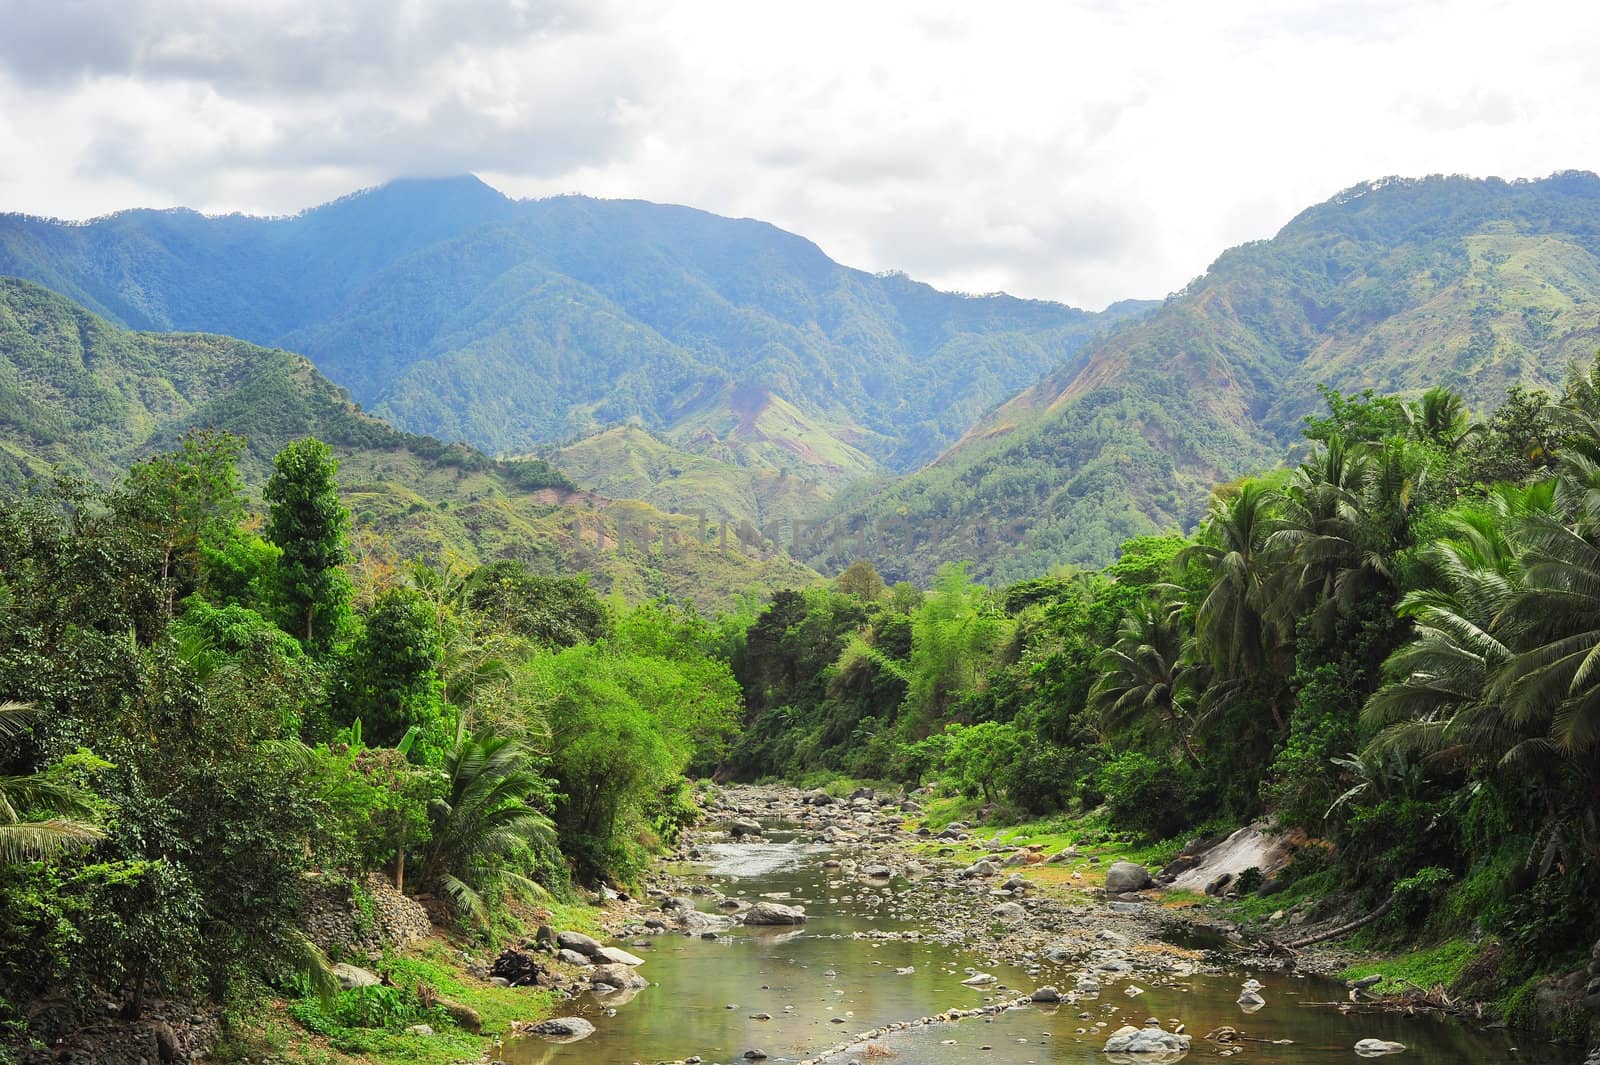 River in Cordillera mountains, Philippines